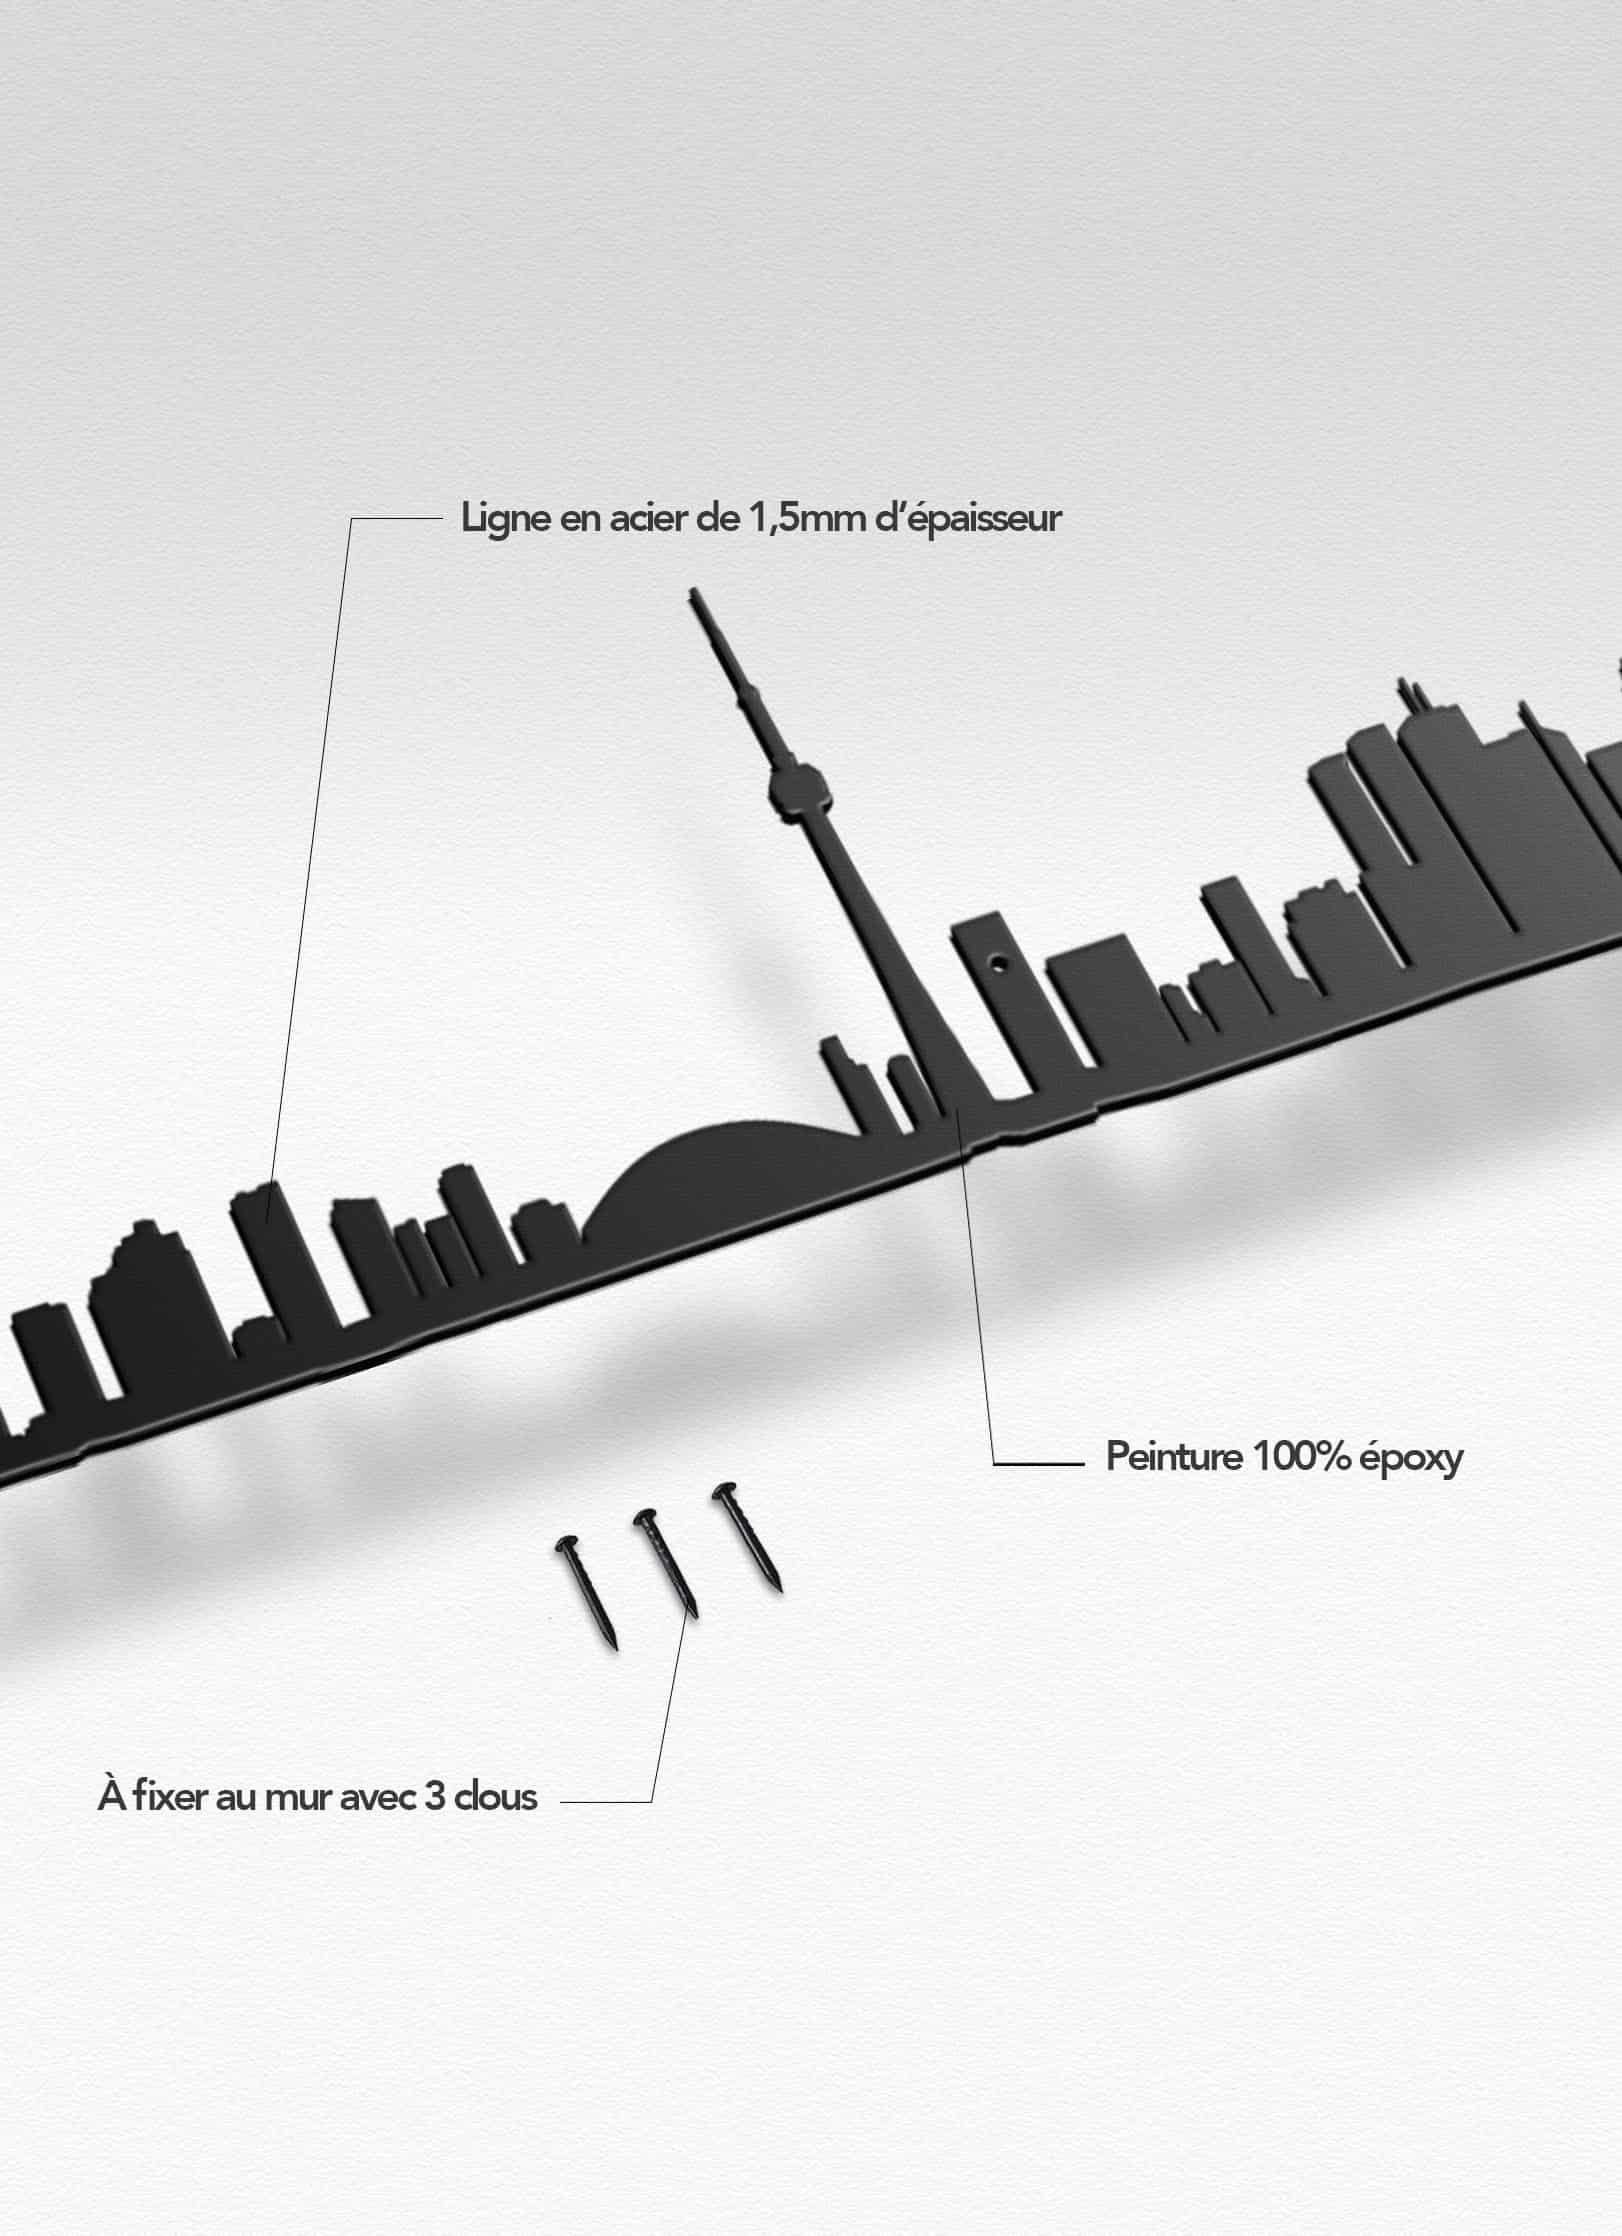 Presentation of the skyline of Toronto